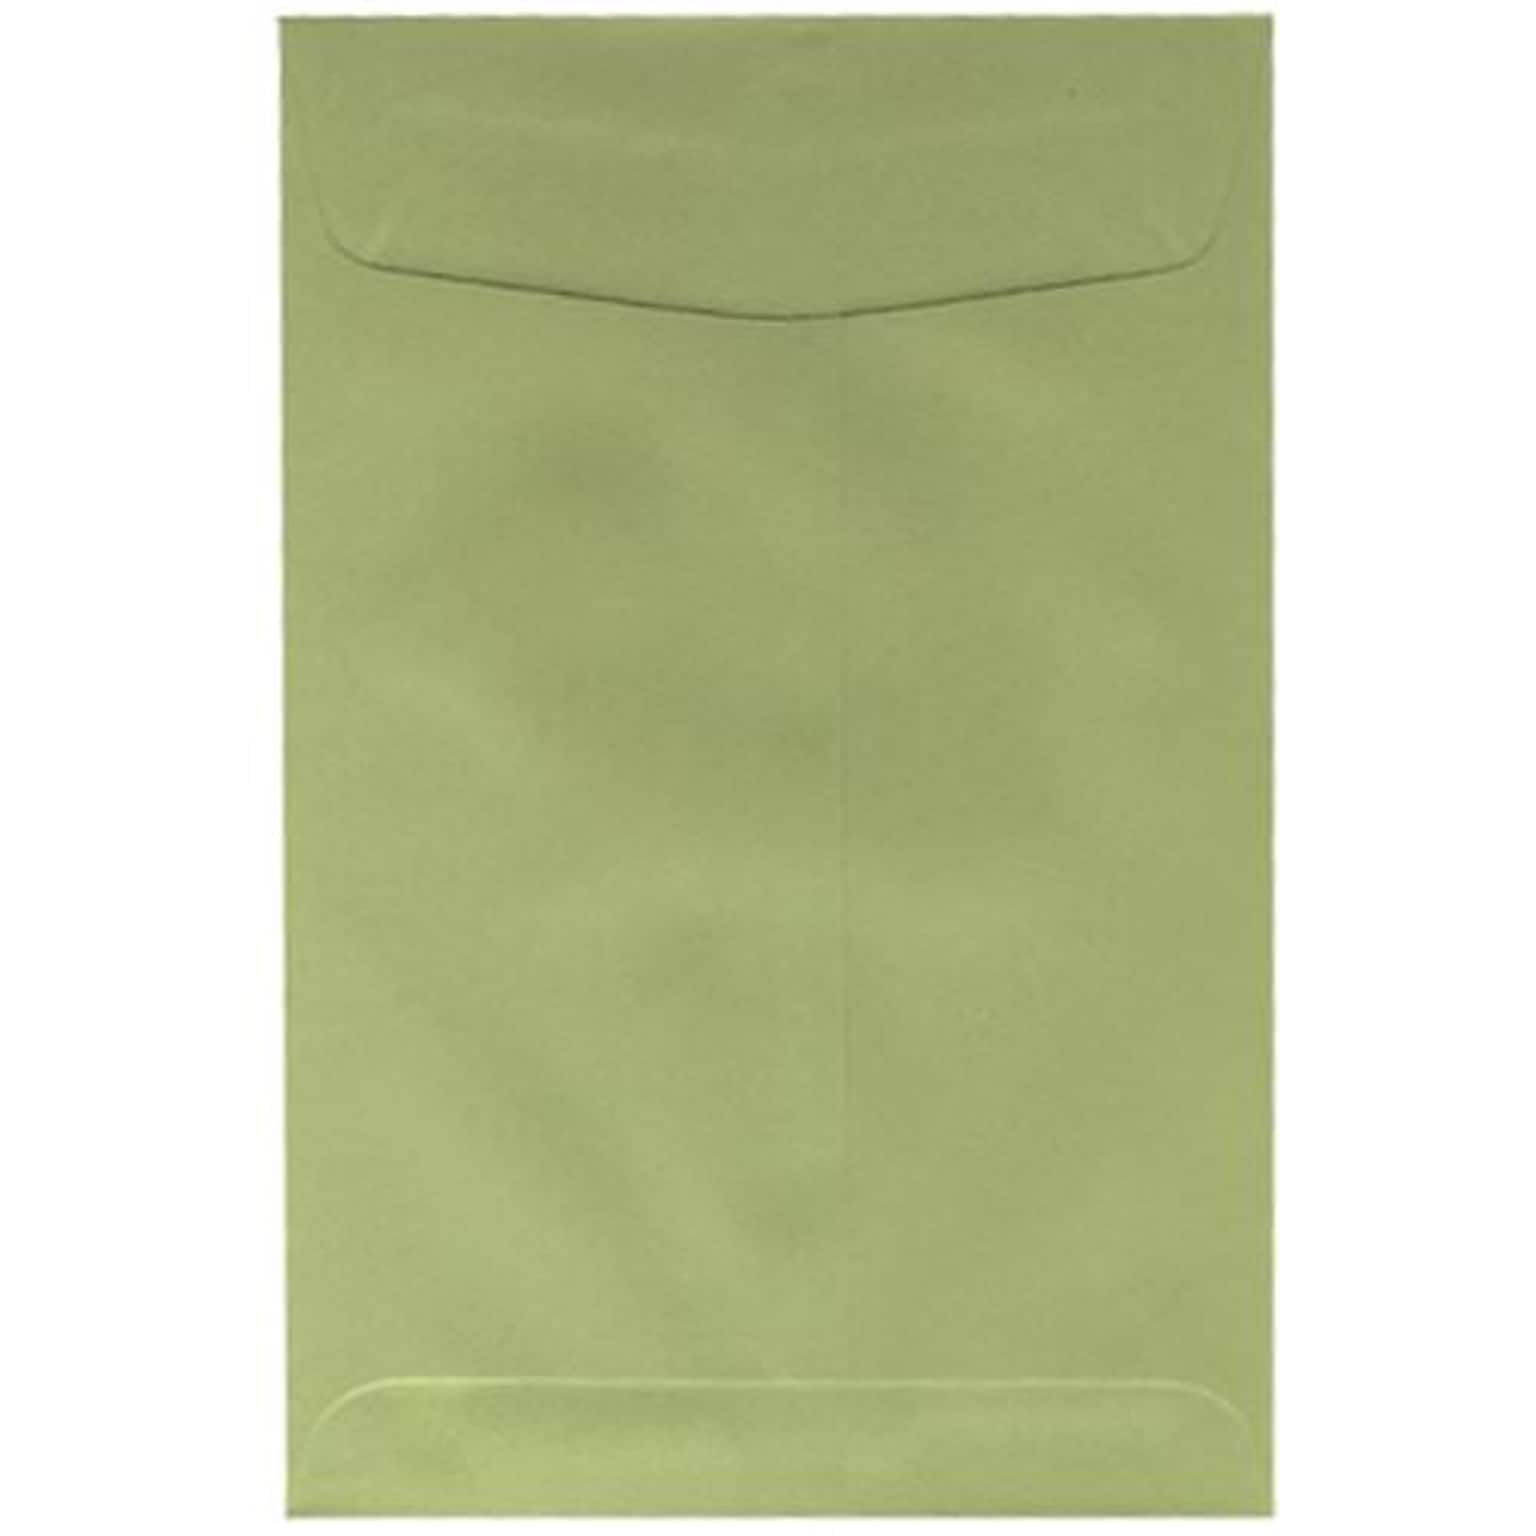 JAM Paper® 6 x 9 Open End Catalog Envelopes, Olive Green, 25/Pack (31287526fa)